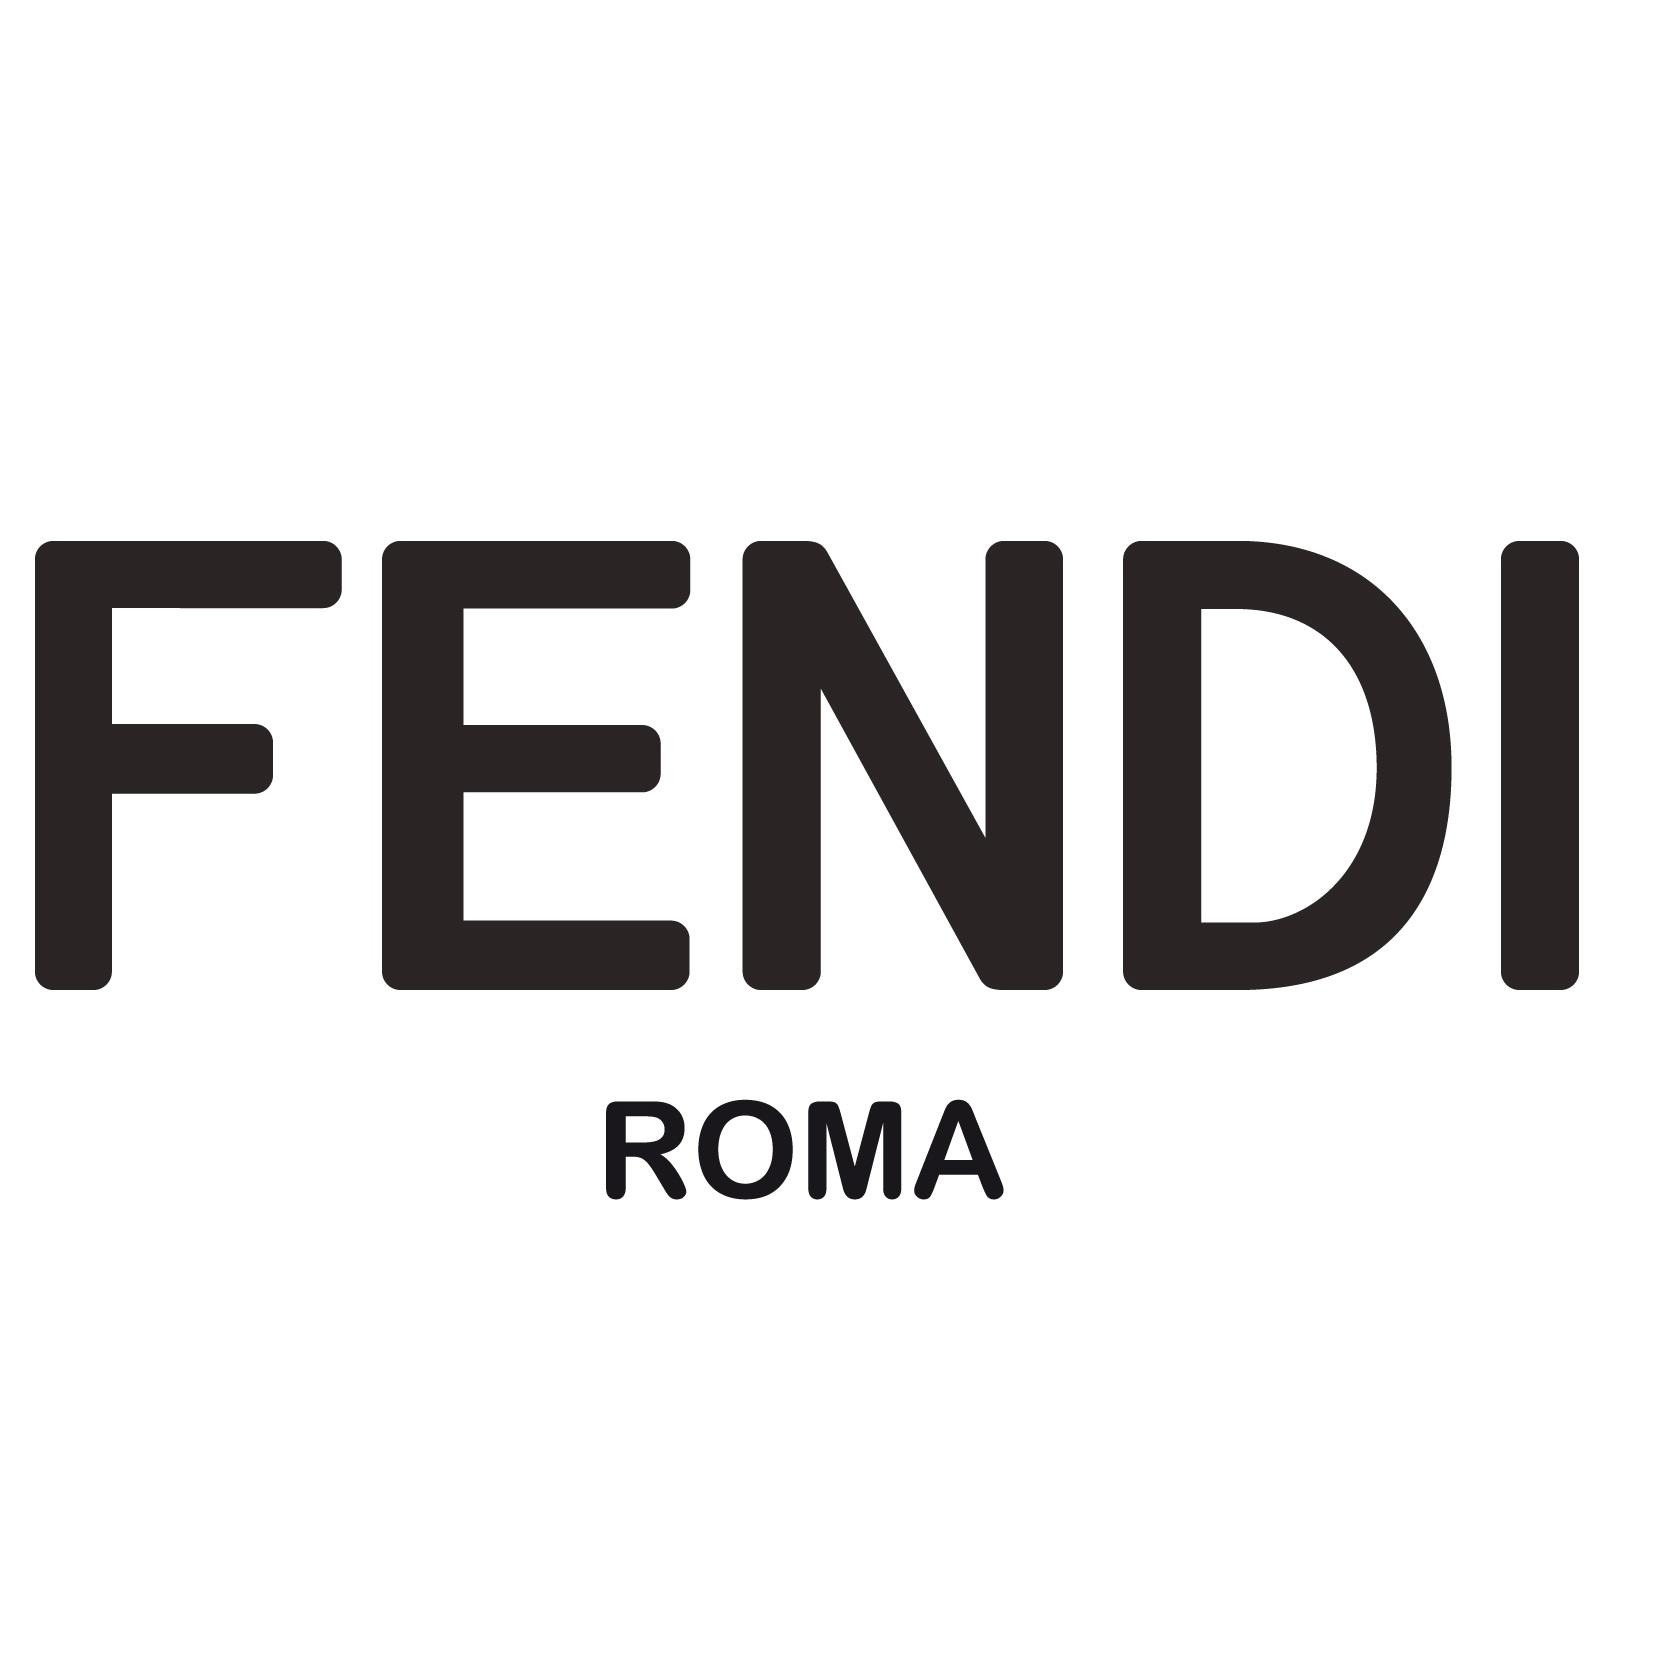 Fendi Vancouver Holt Renfrew - Leather Goods Retailers